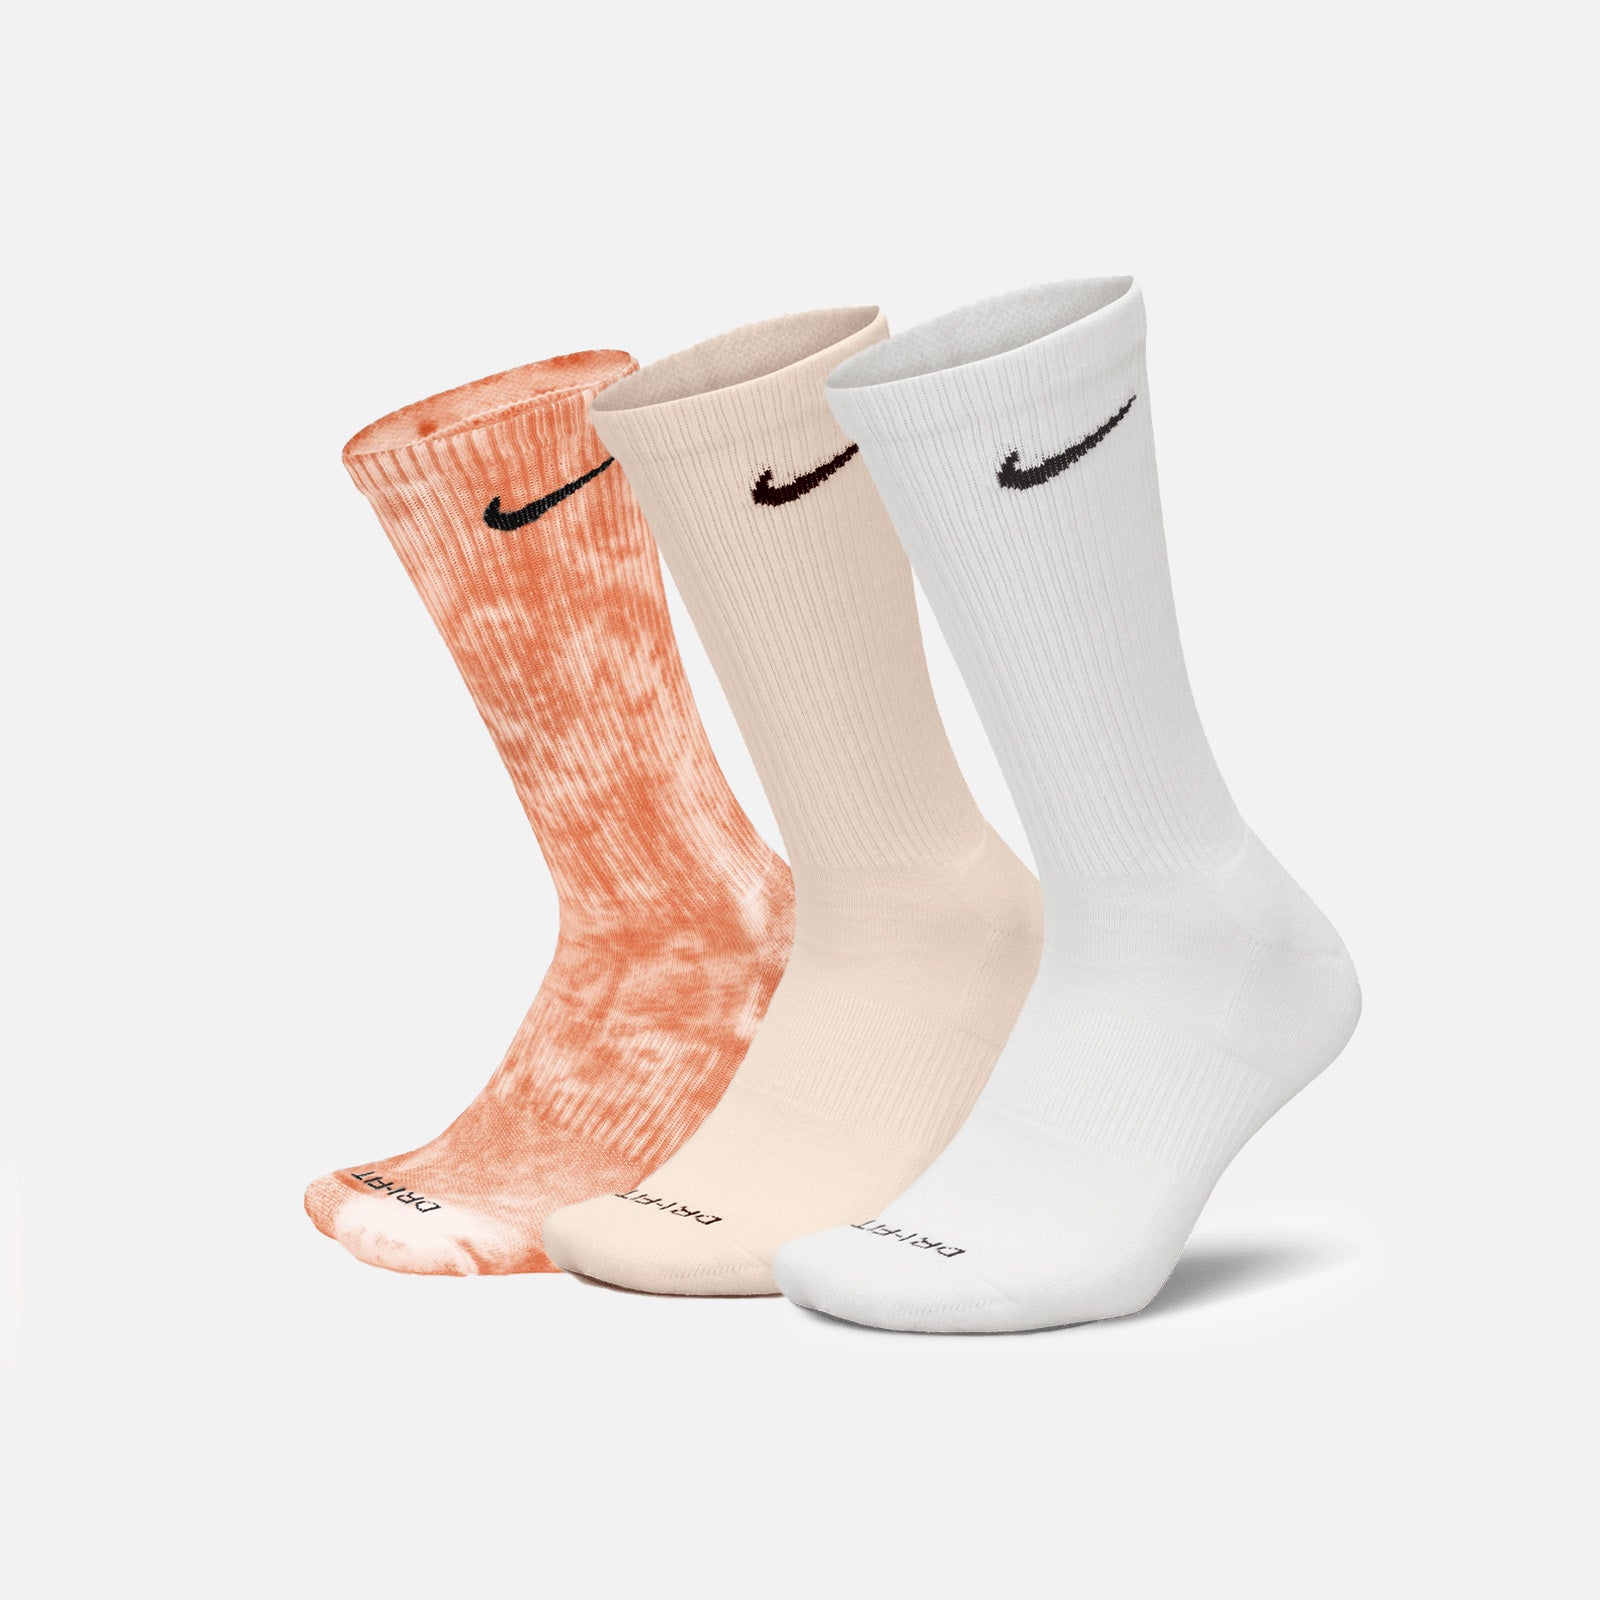 Nike Everyday Plus Cushioned Tie Dye Crew Socks (3 Pairs) - Multi -  Throwback